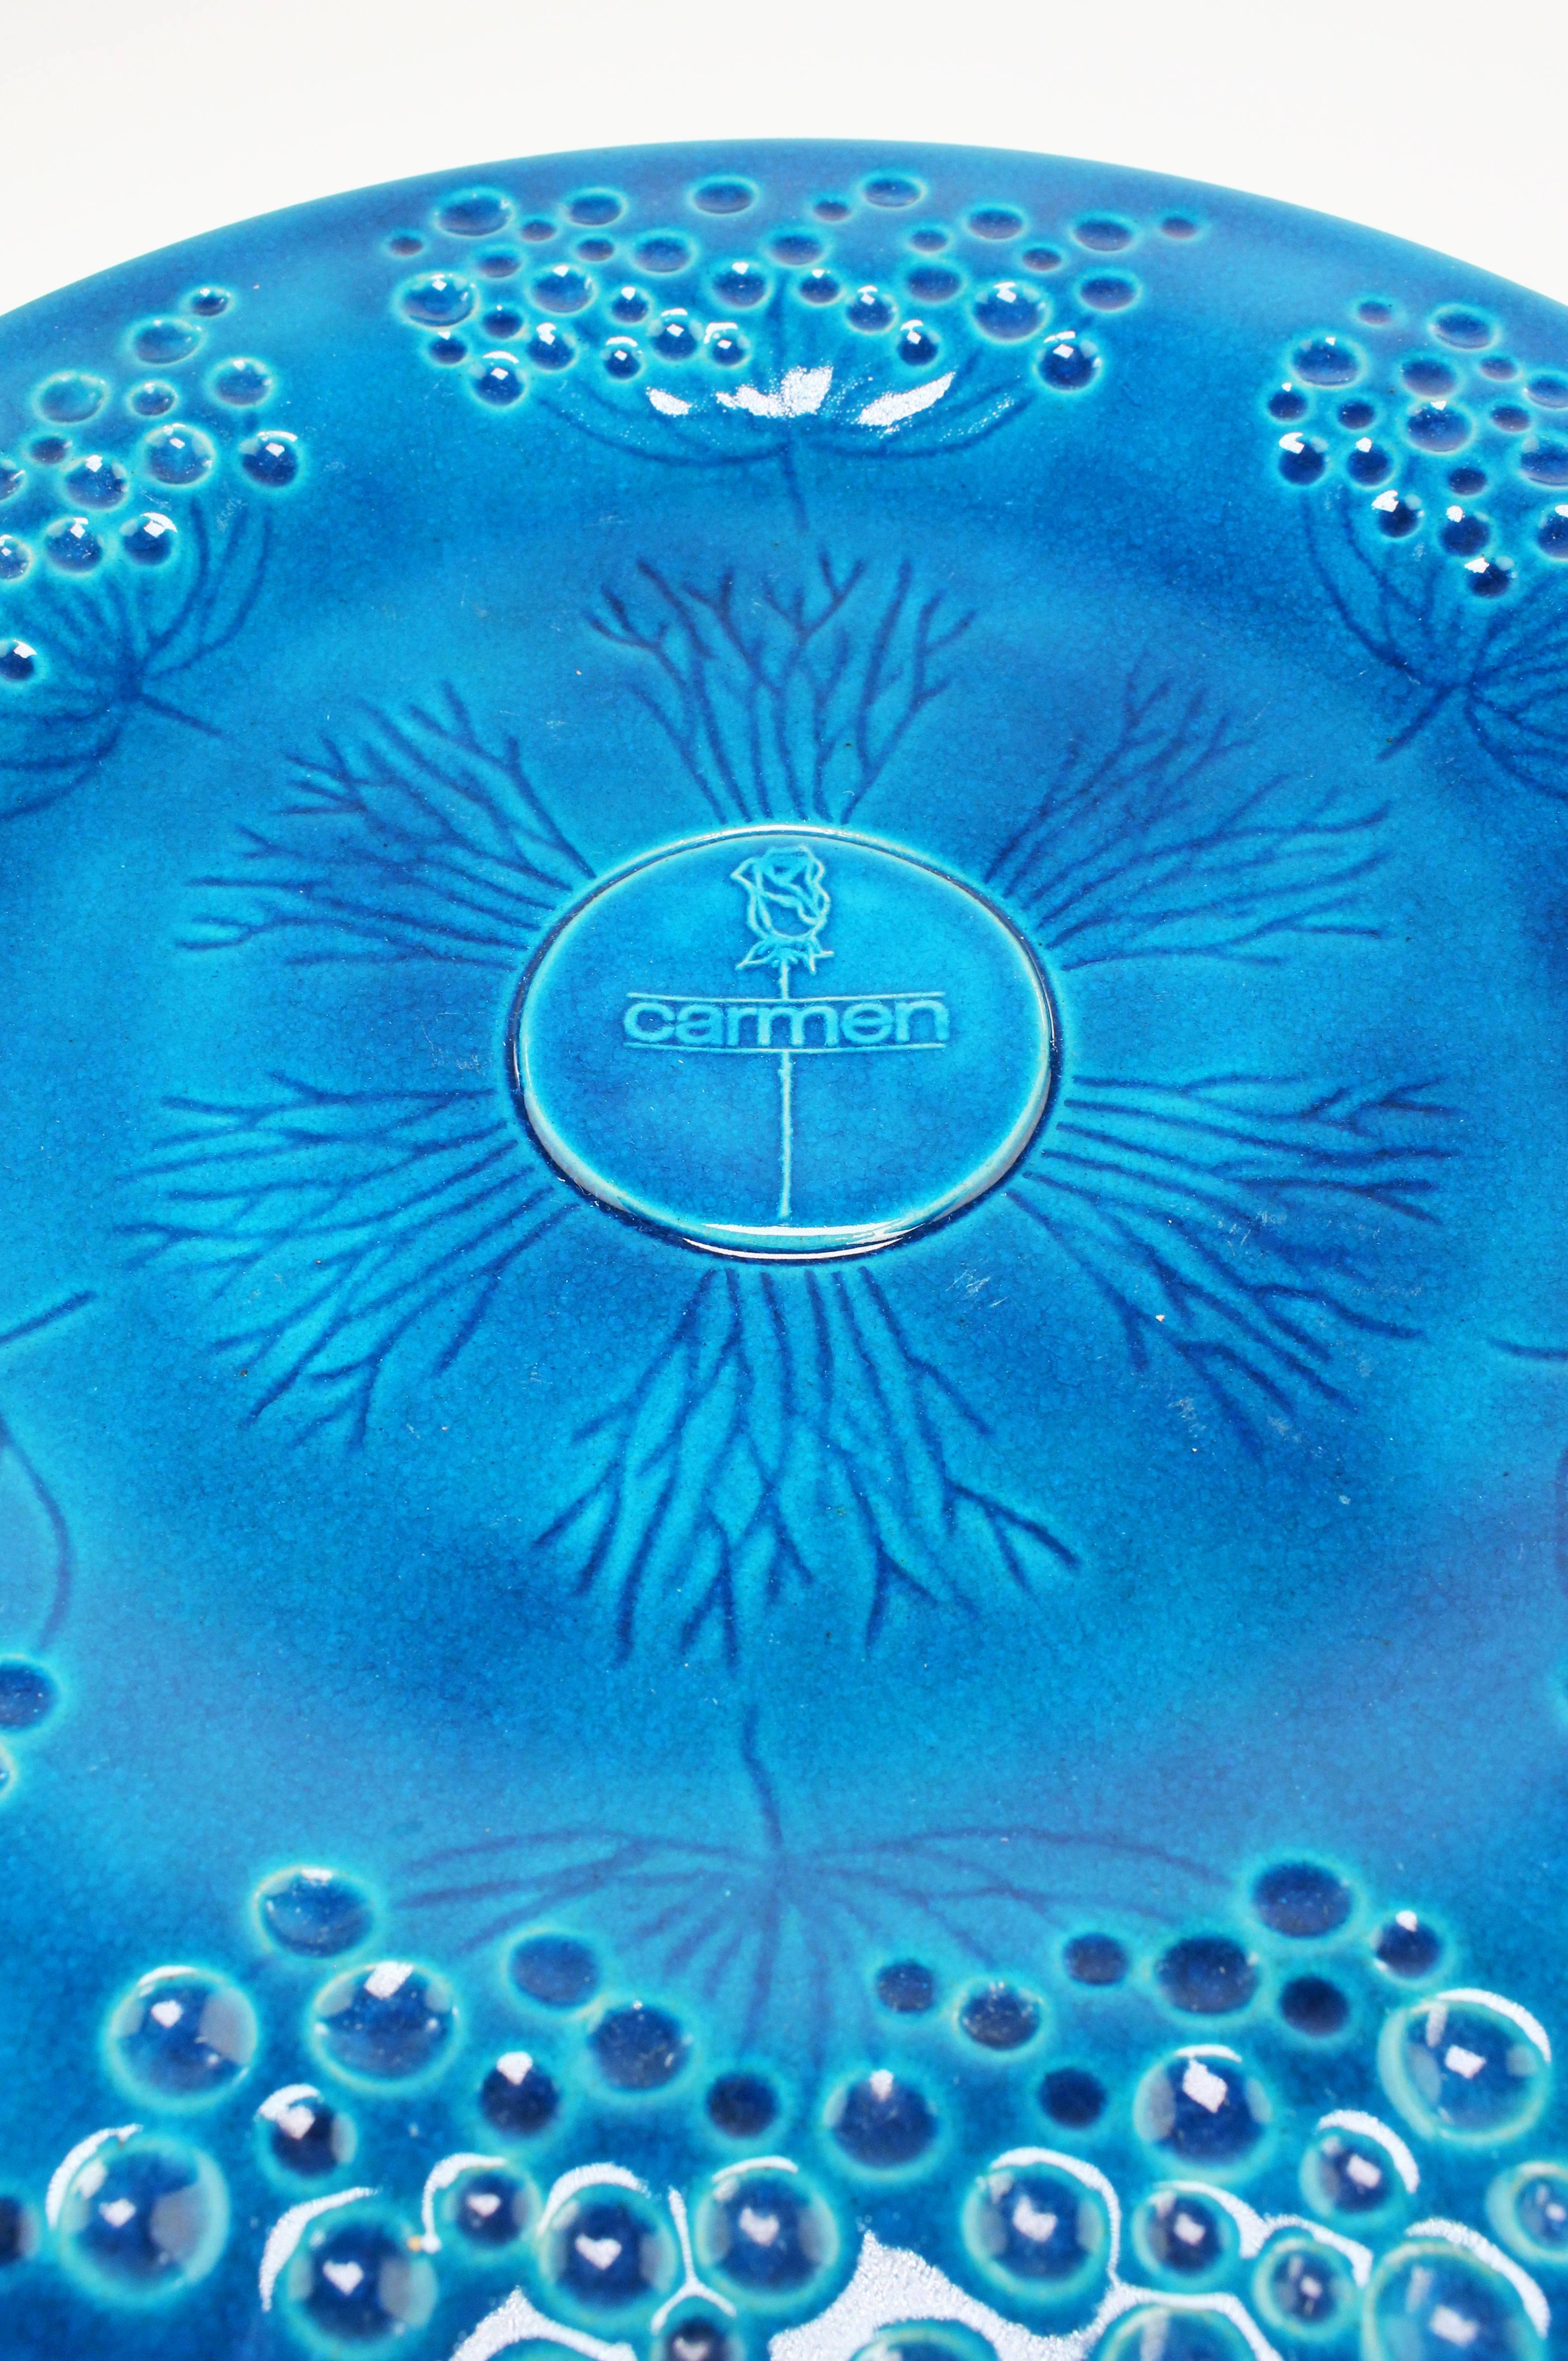 Mid-Century Modern Kähler 1950s Turquoise Blue Carmen Centerpiece, Wall Plate For Sale